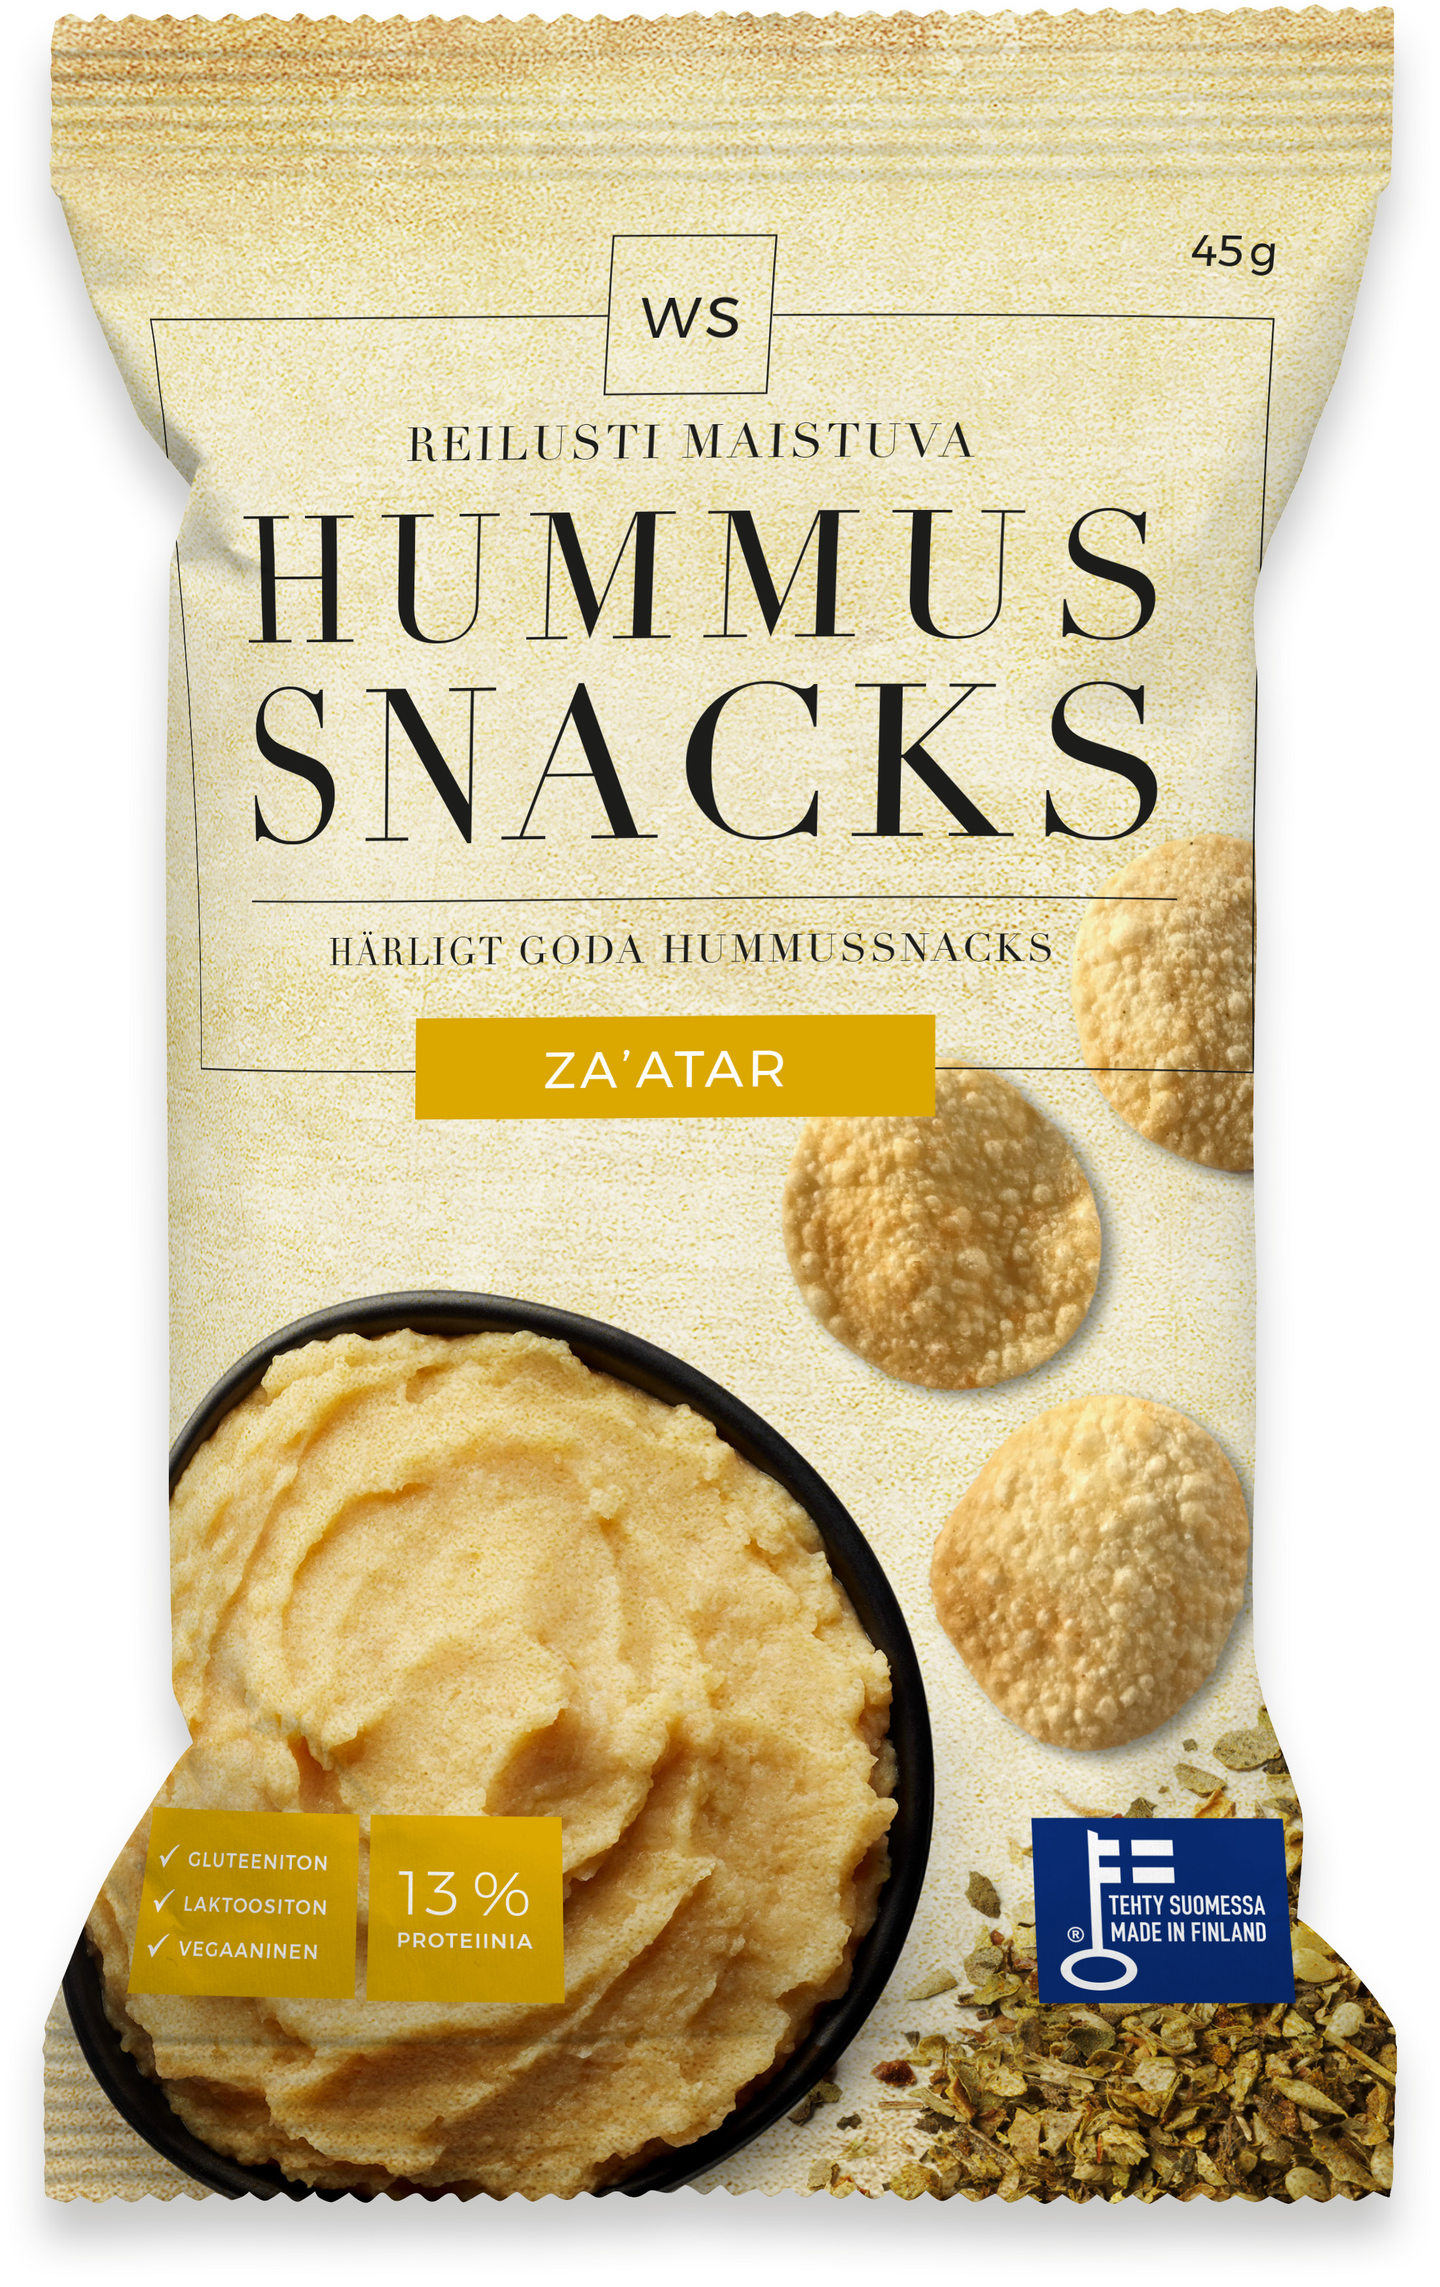 WS hummus snacks 45g zaatar